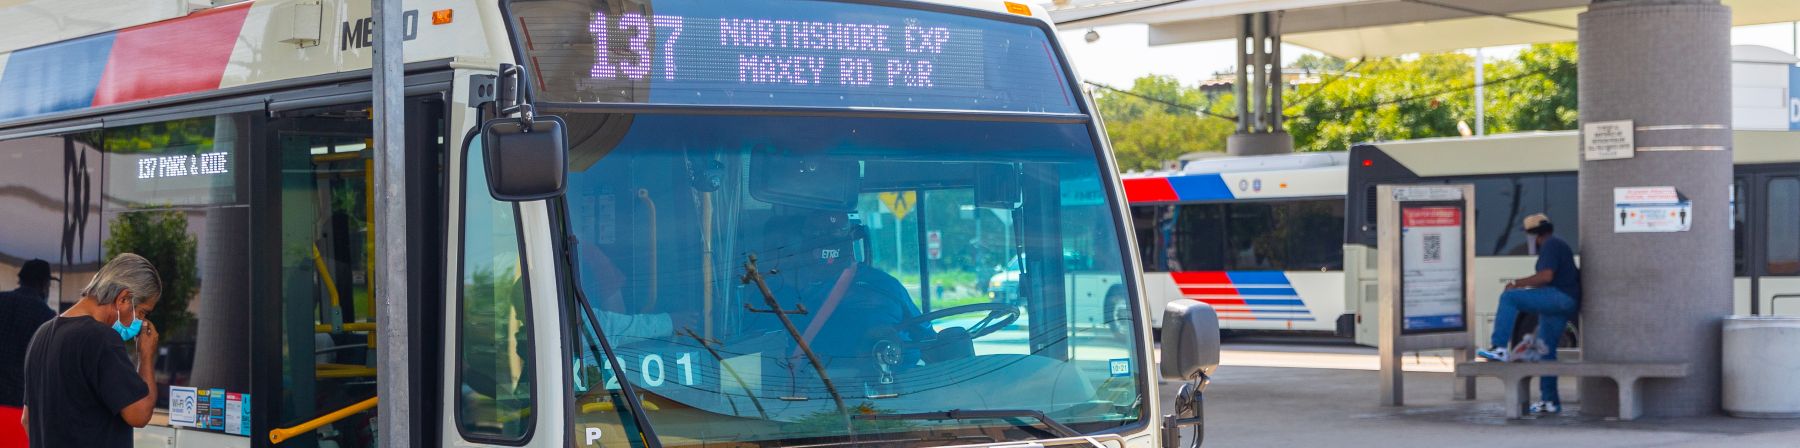 137 Northshore Express bus